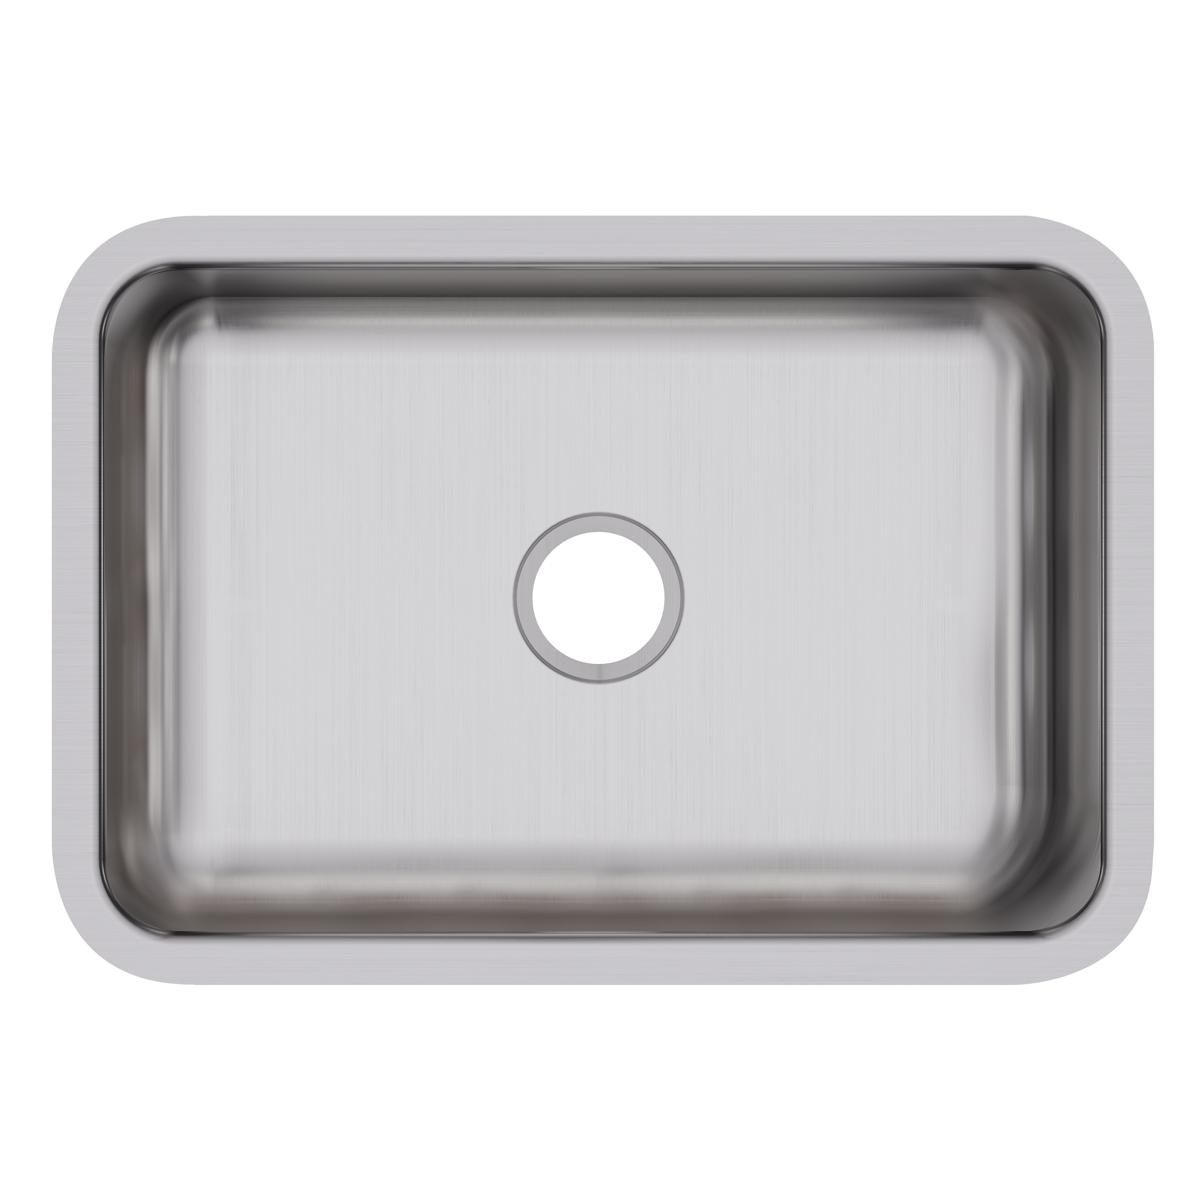 Elkay Dayton Stainless Steel 26-1/2" x 18-1/2" x 8" Single Bowl Undermount Sink